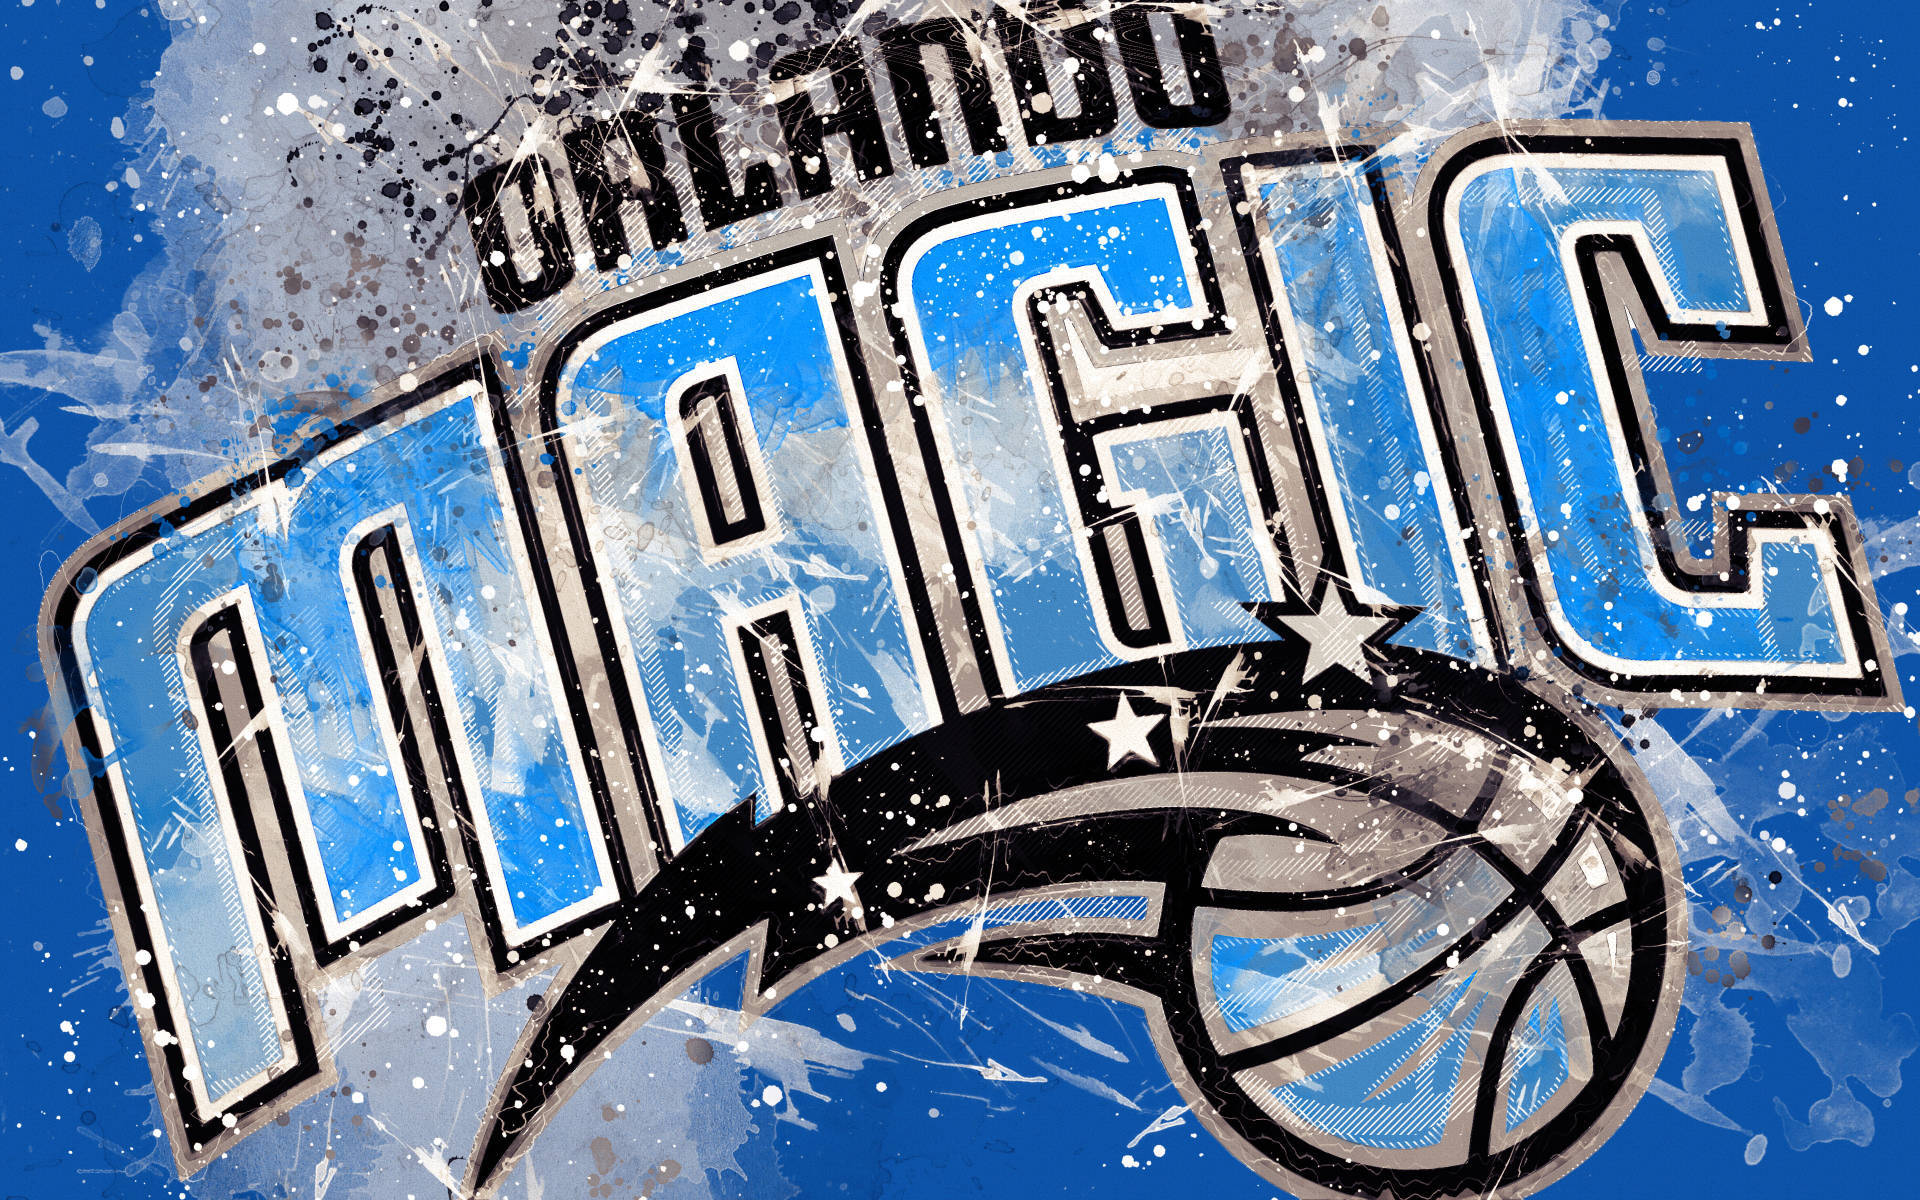 Orlandosmagic-logotyp Digital Fanart. Wallpaper